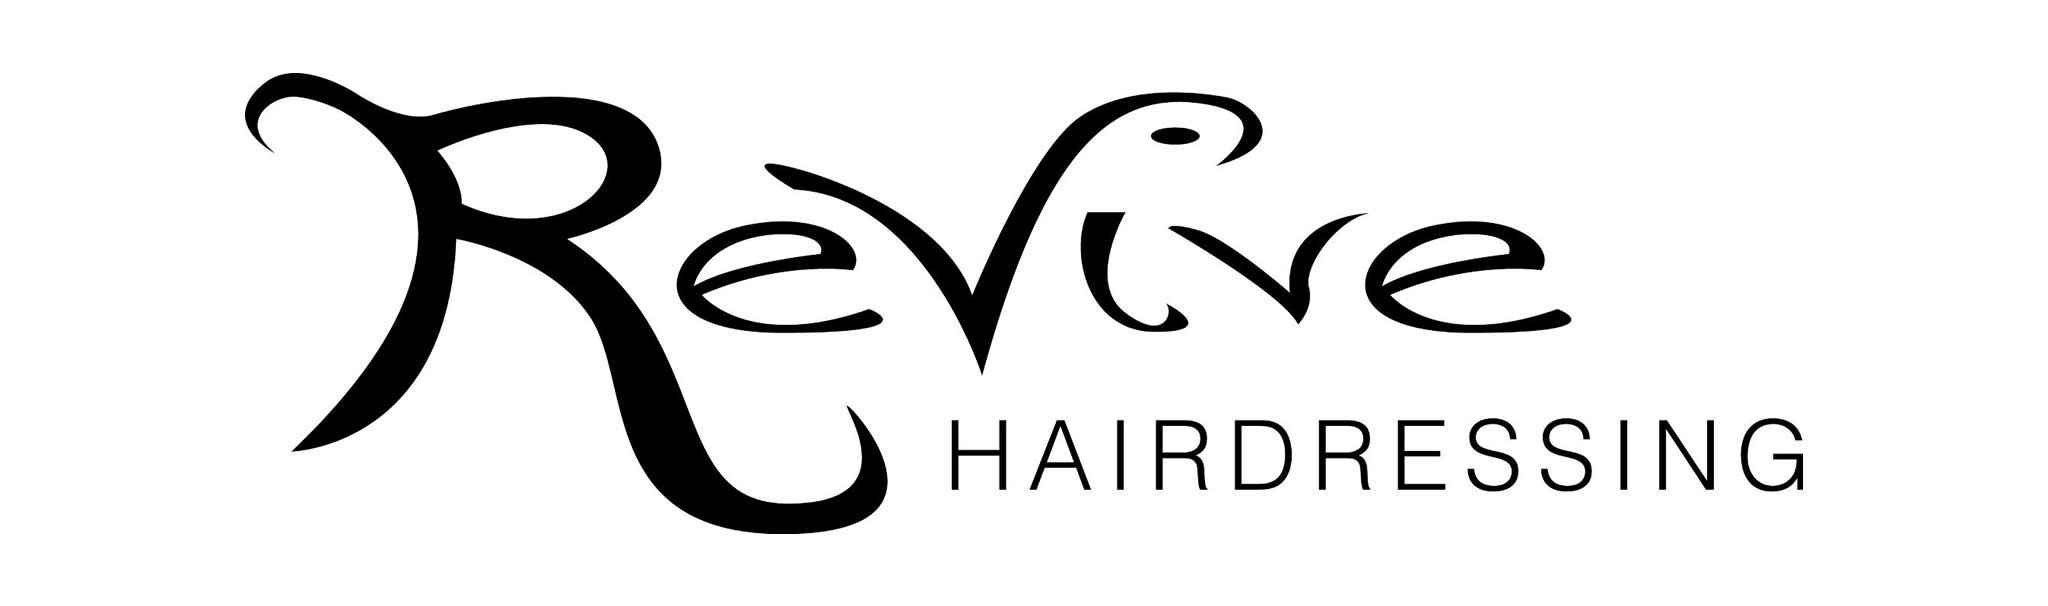 Revive Hairdressing logo